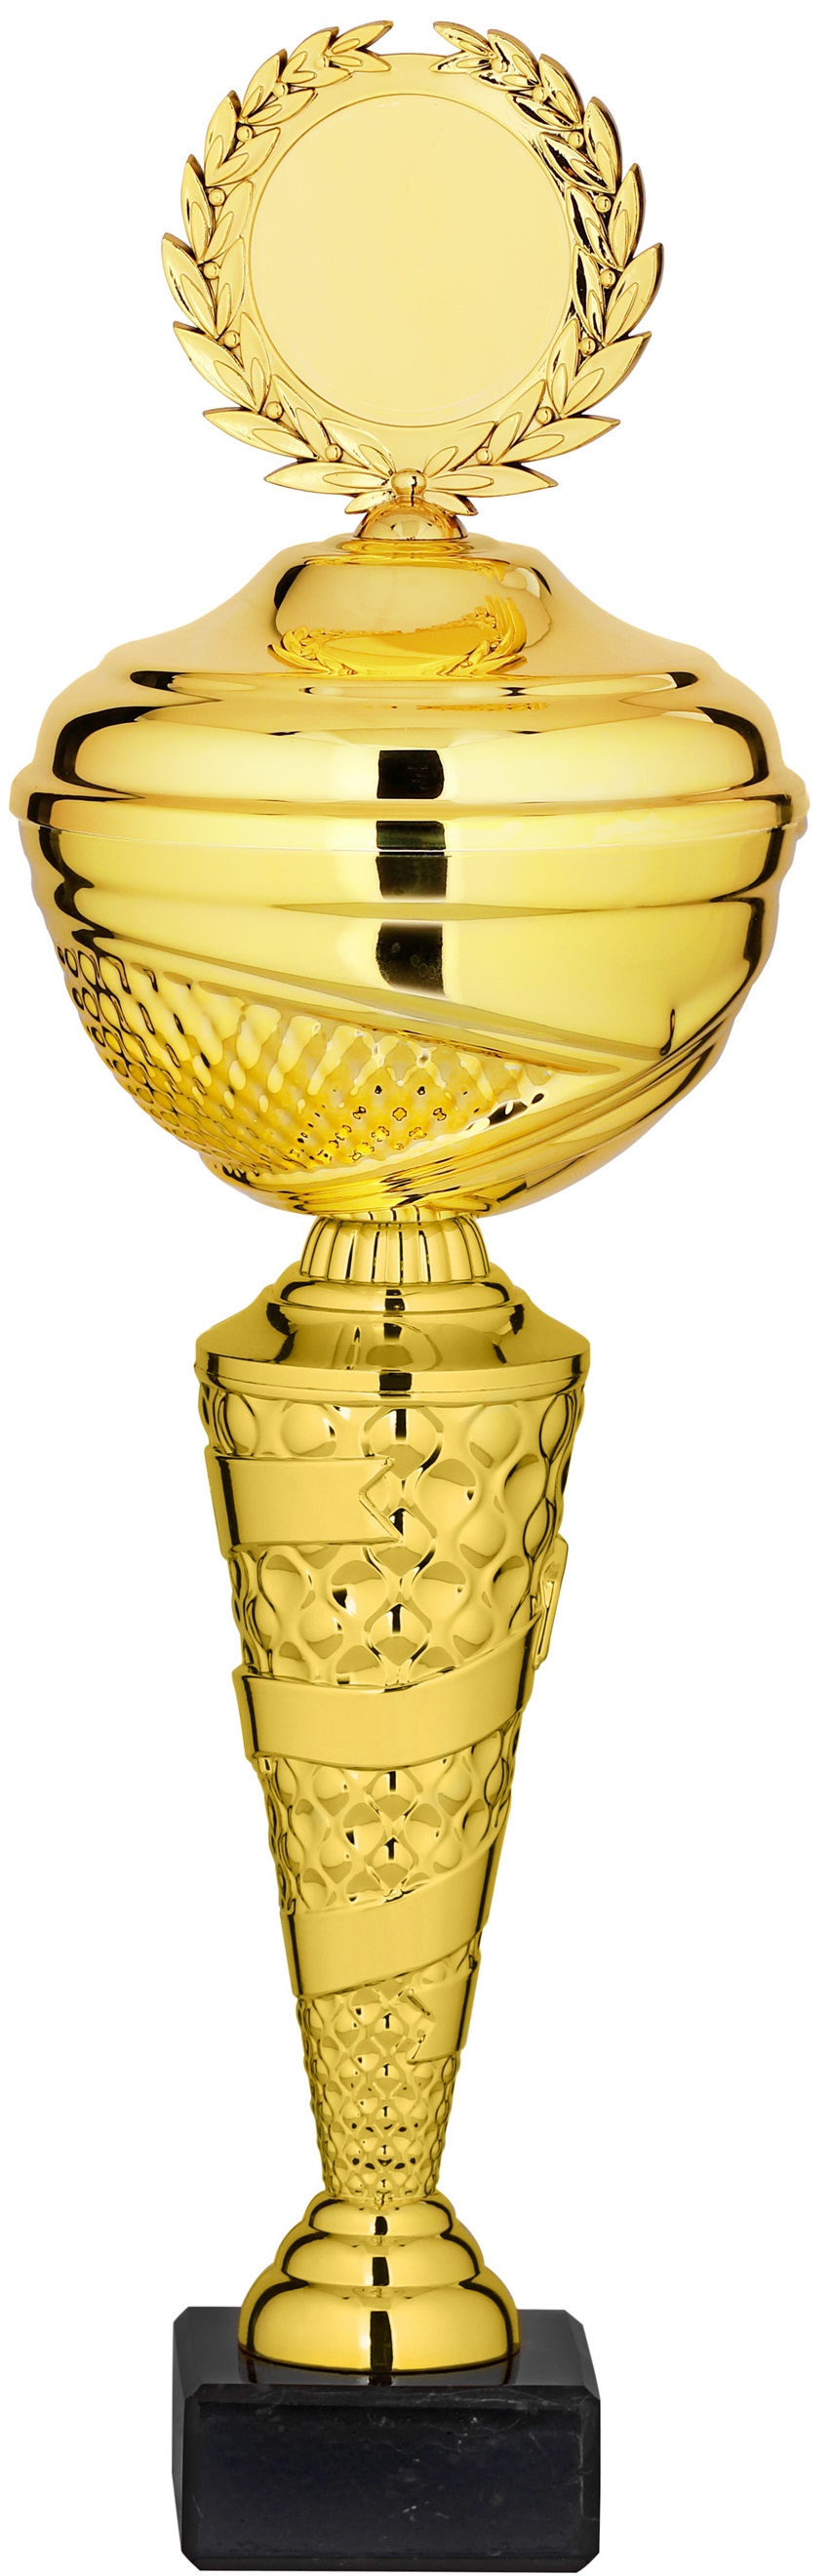 Pokal P600-Gold  inkl. Gravur und Emblem 37,5 cm